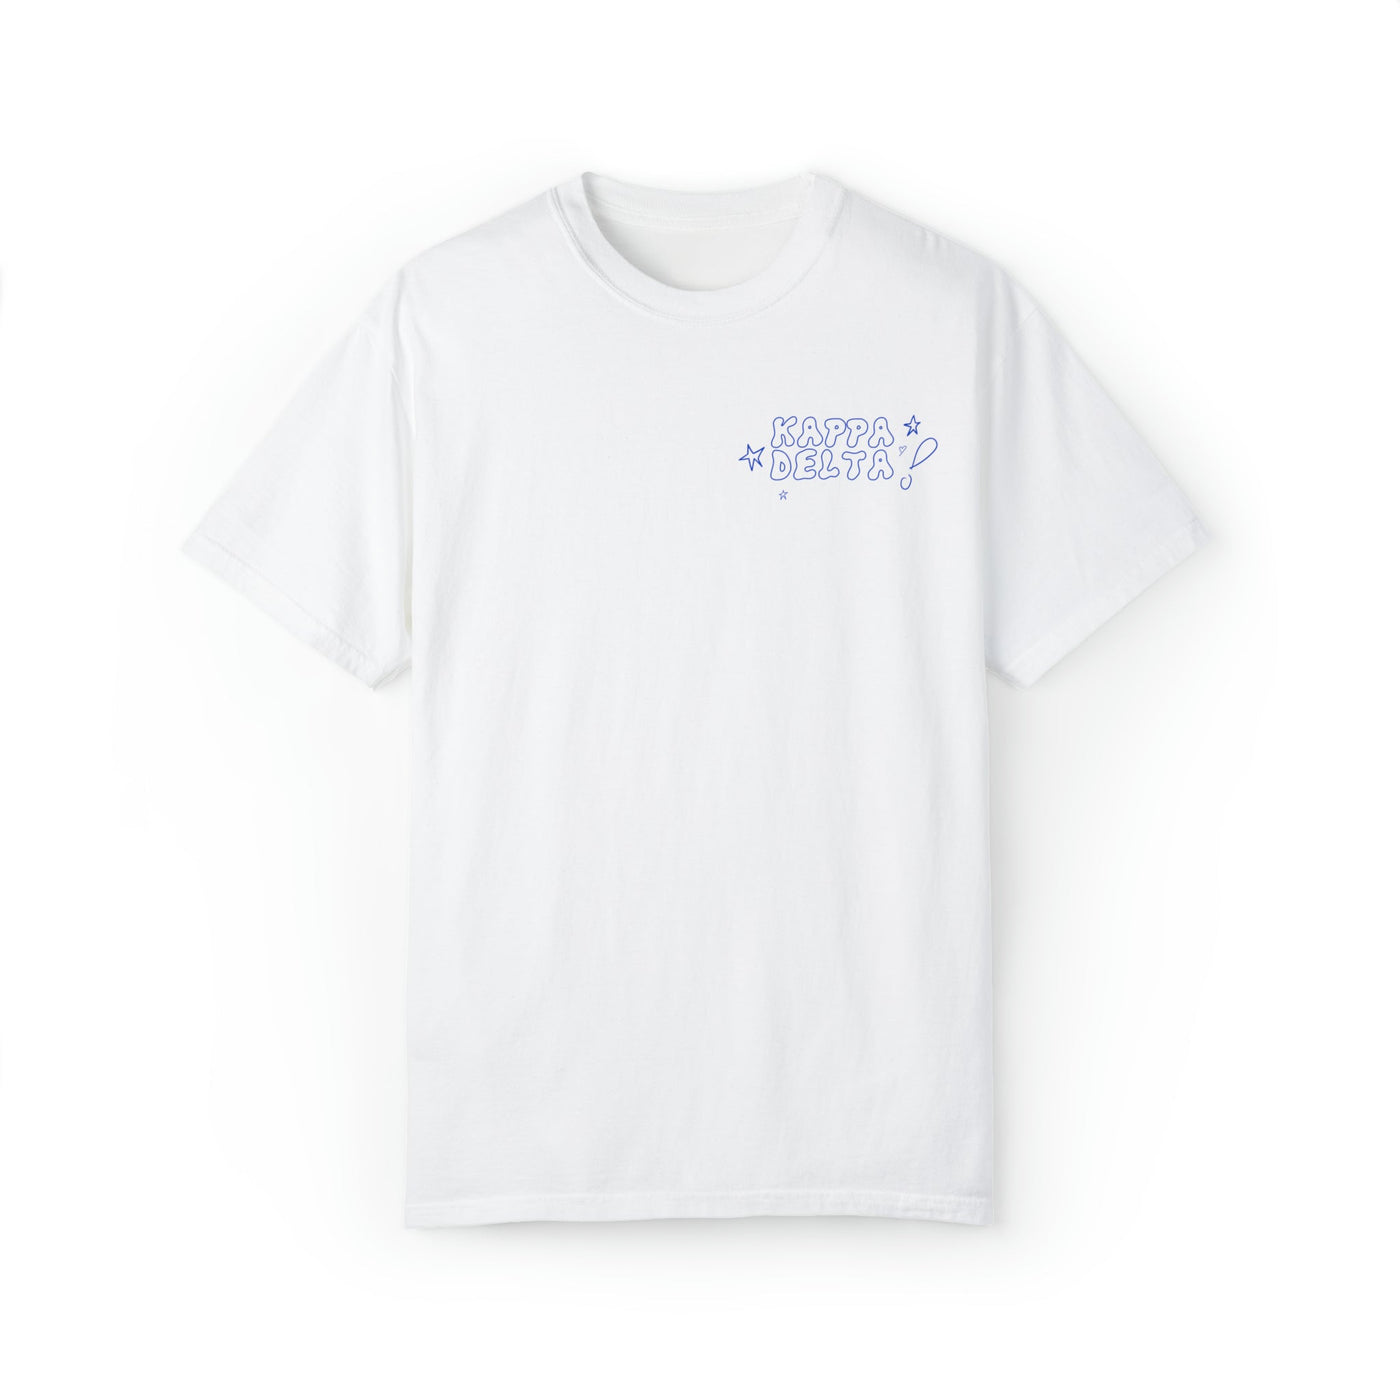 Kappa Delta Love Doodle Sorority T-shirt